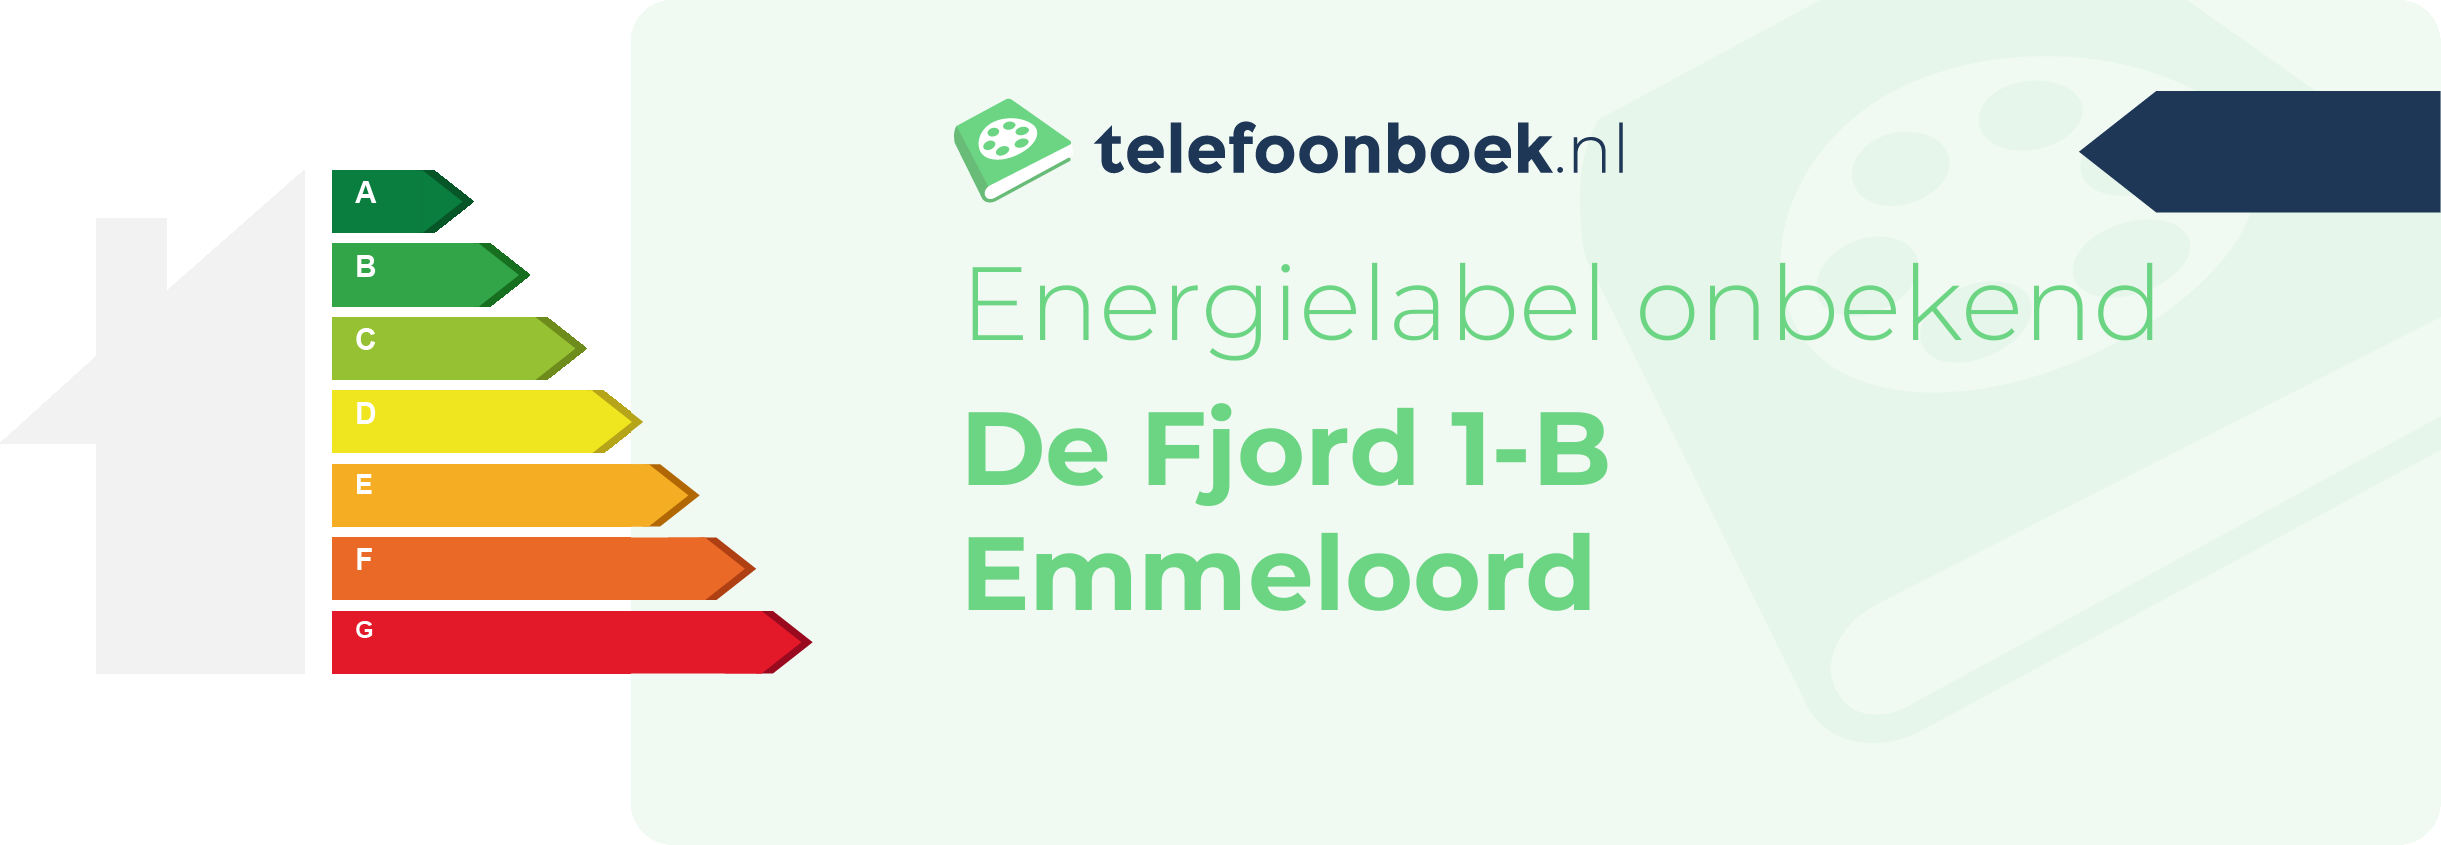 Energielabel De Fjord 1-B Emmeloord